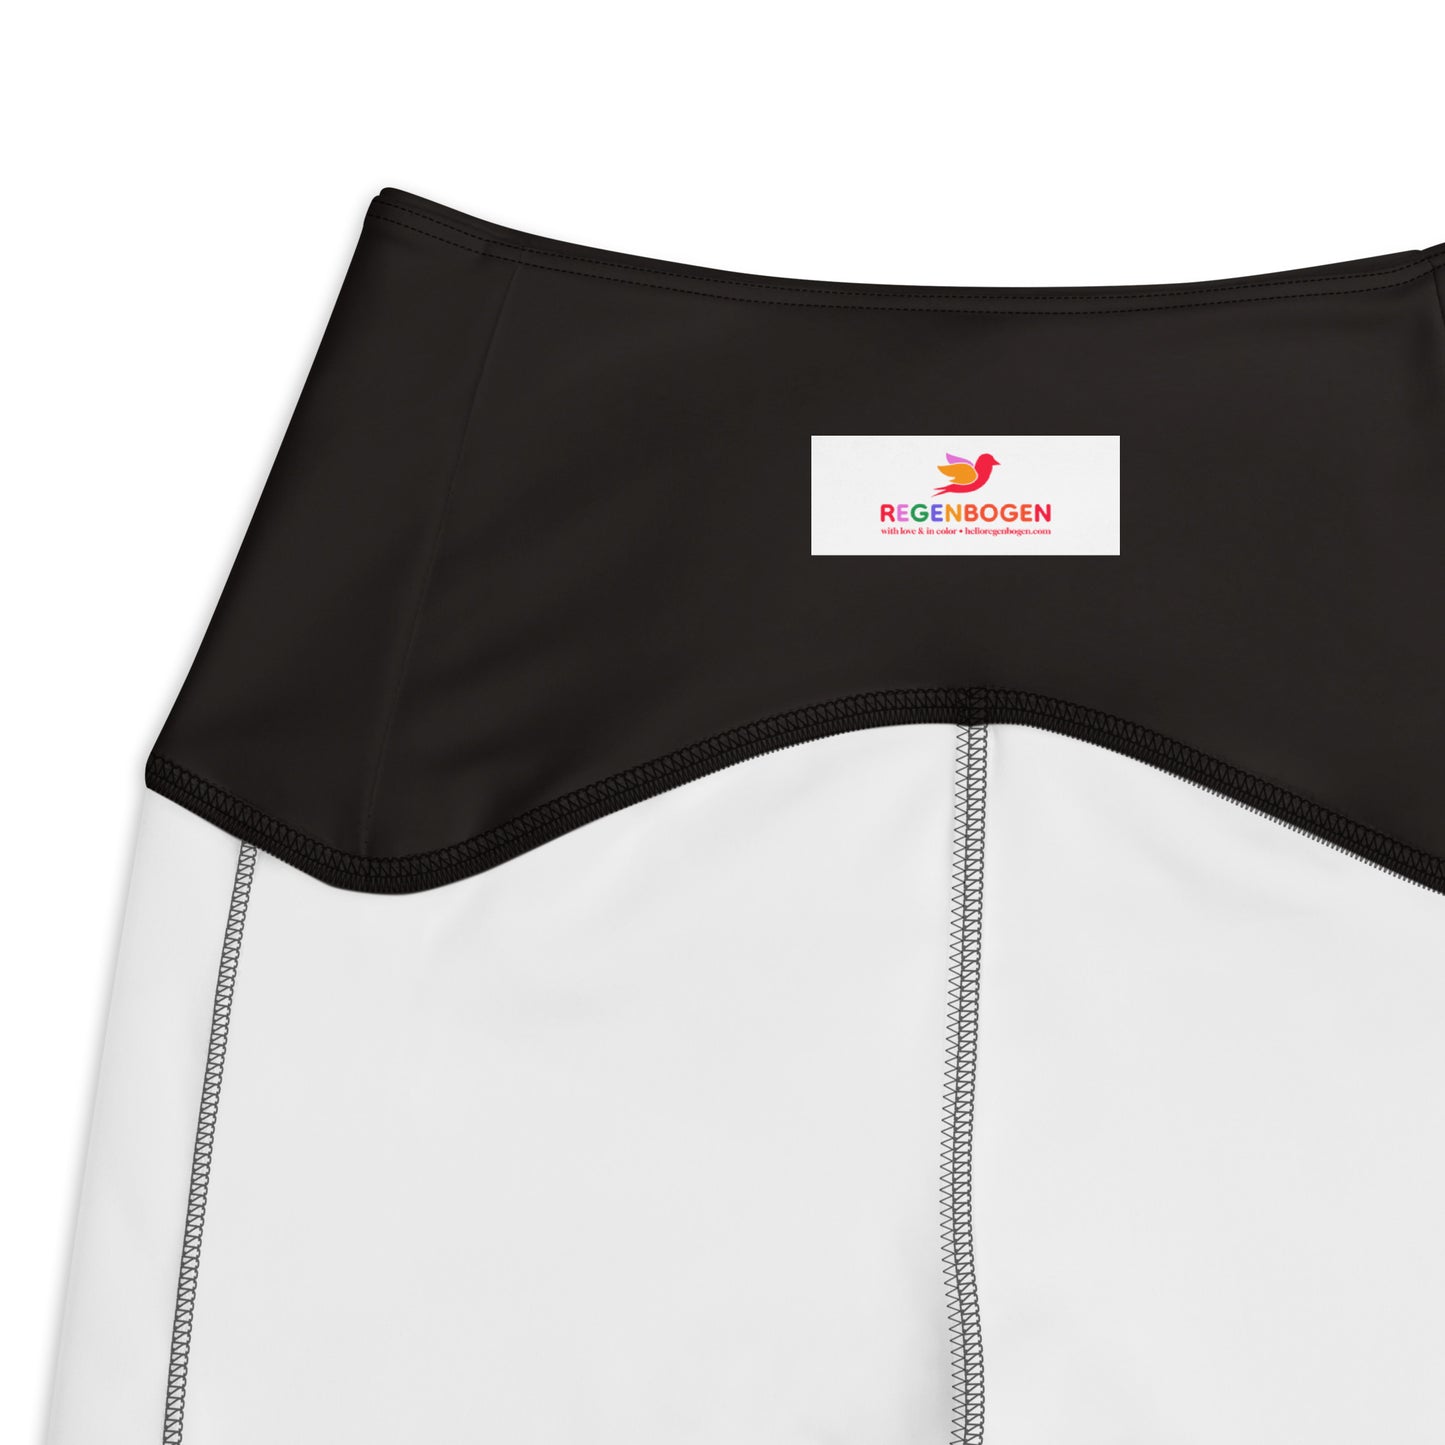 Amatxoa Crossover Waist 7/8 Recycled Yoga Leggings / Yoga Pants with Pockets